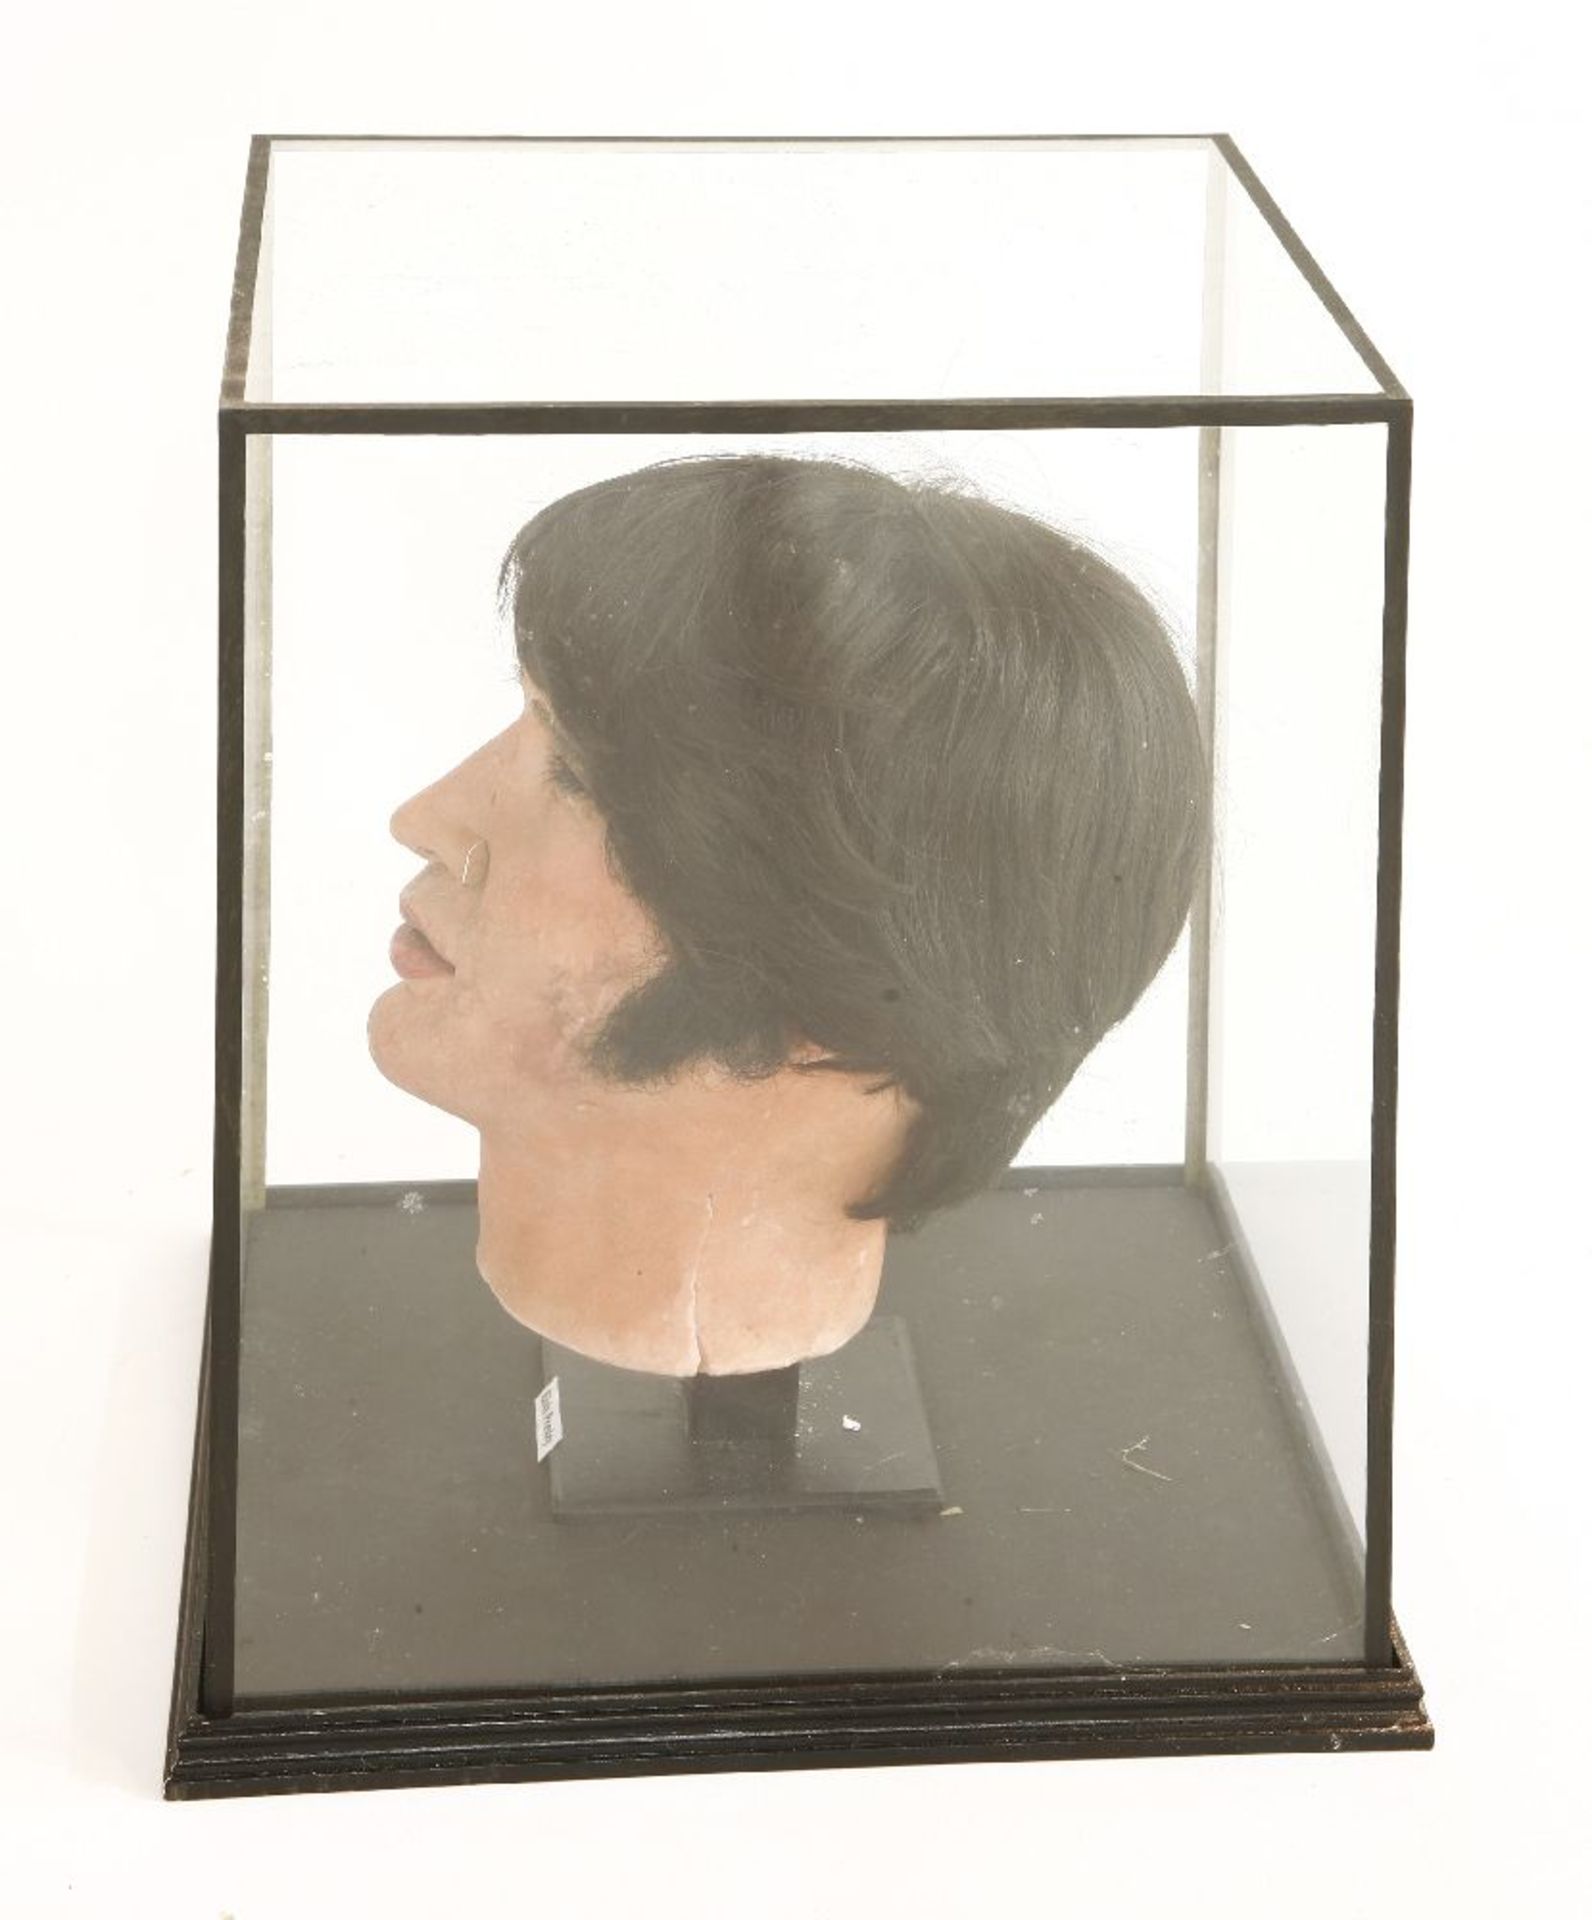 ELVIS PRESLEY,1960s, a waxwork museum head of an older Elvis Presley, mounted in a glass case,case - Image 2 of 2